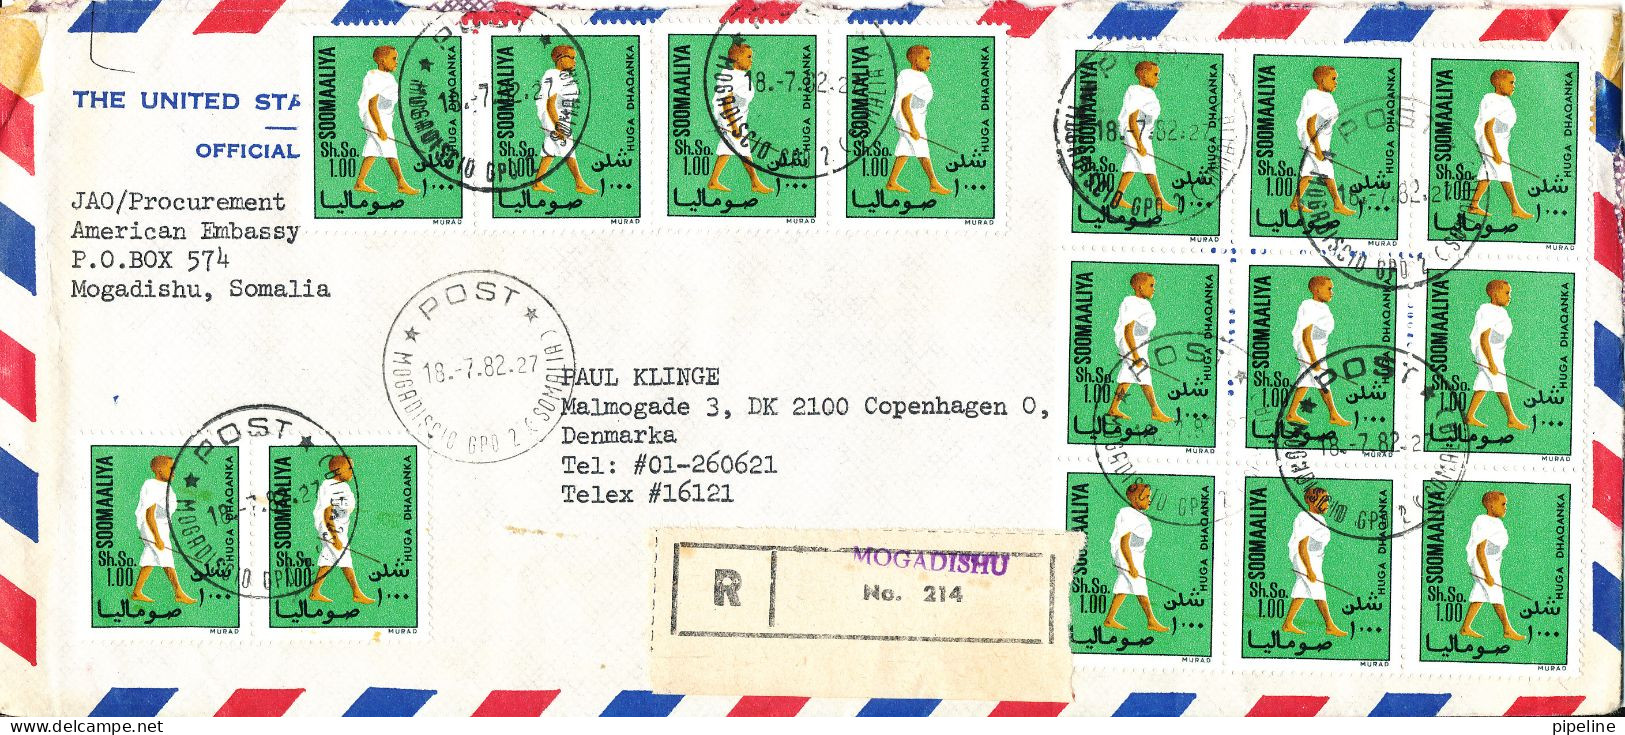 Somalia Registered Air Mail Cover Sent To Denmark Mogadishu 18-7-1982 With 15 Of The Same Stamp - Somalia (1960-...)